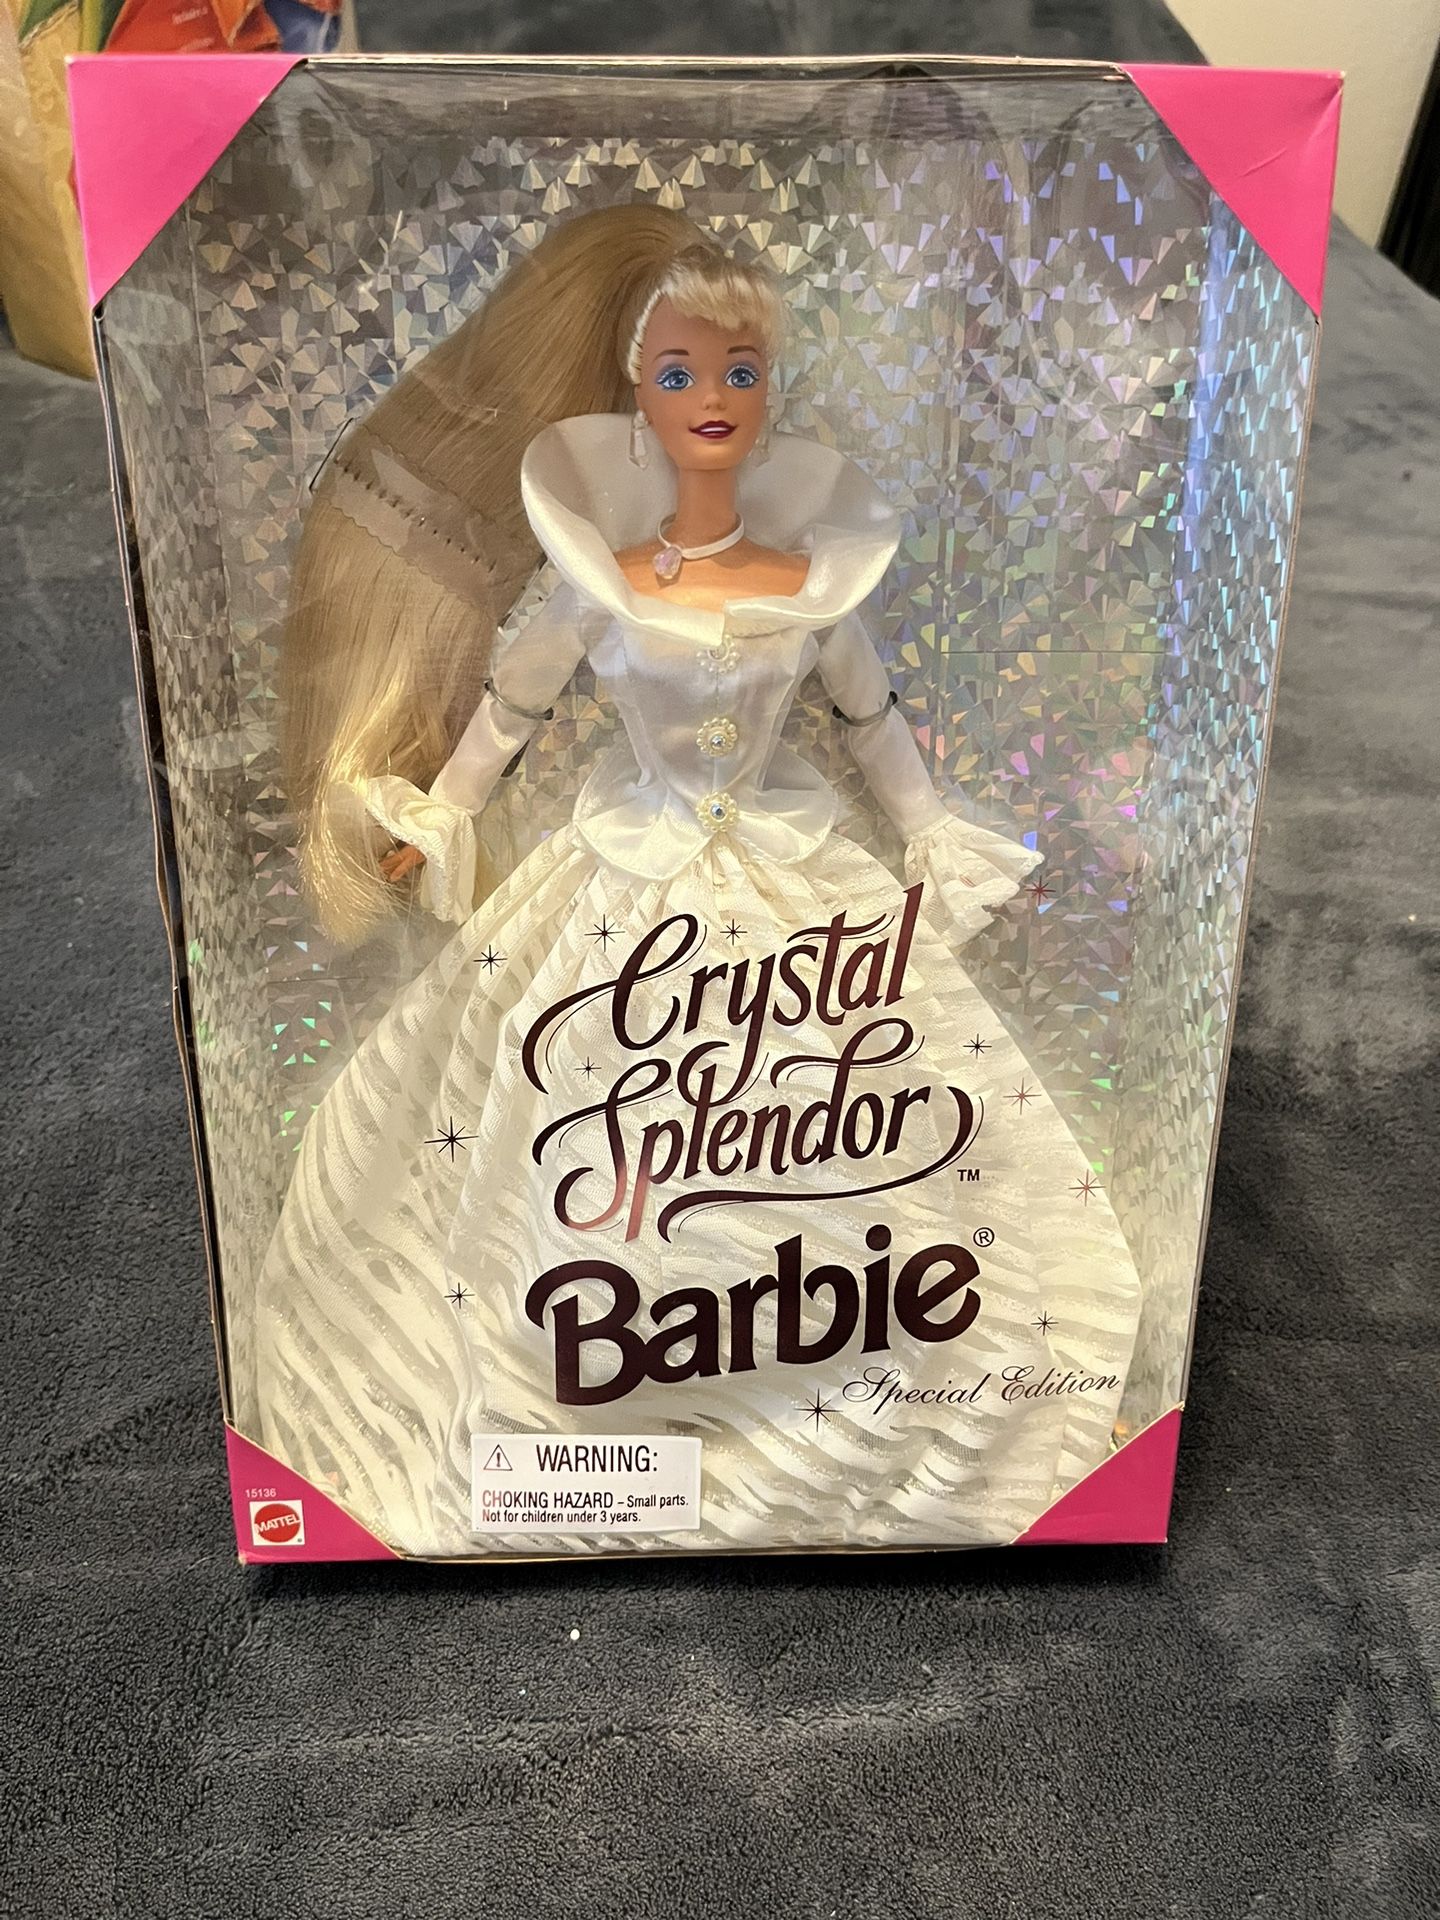 1995 Crystal Splendor Barbie